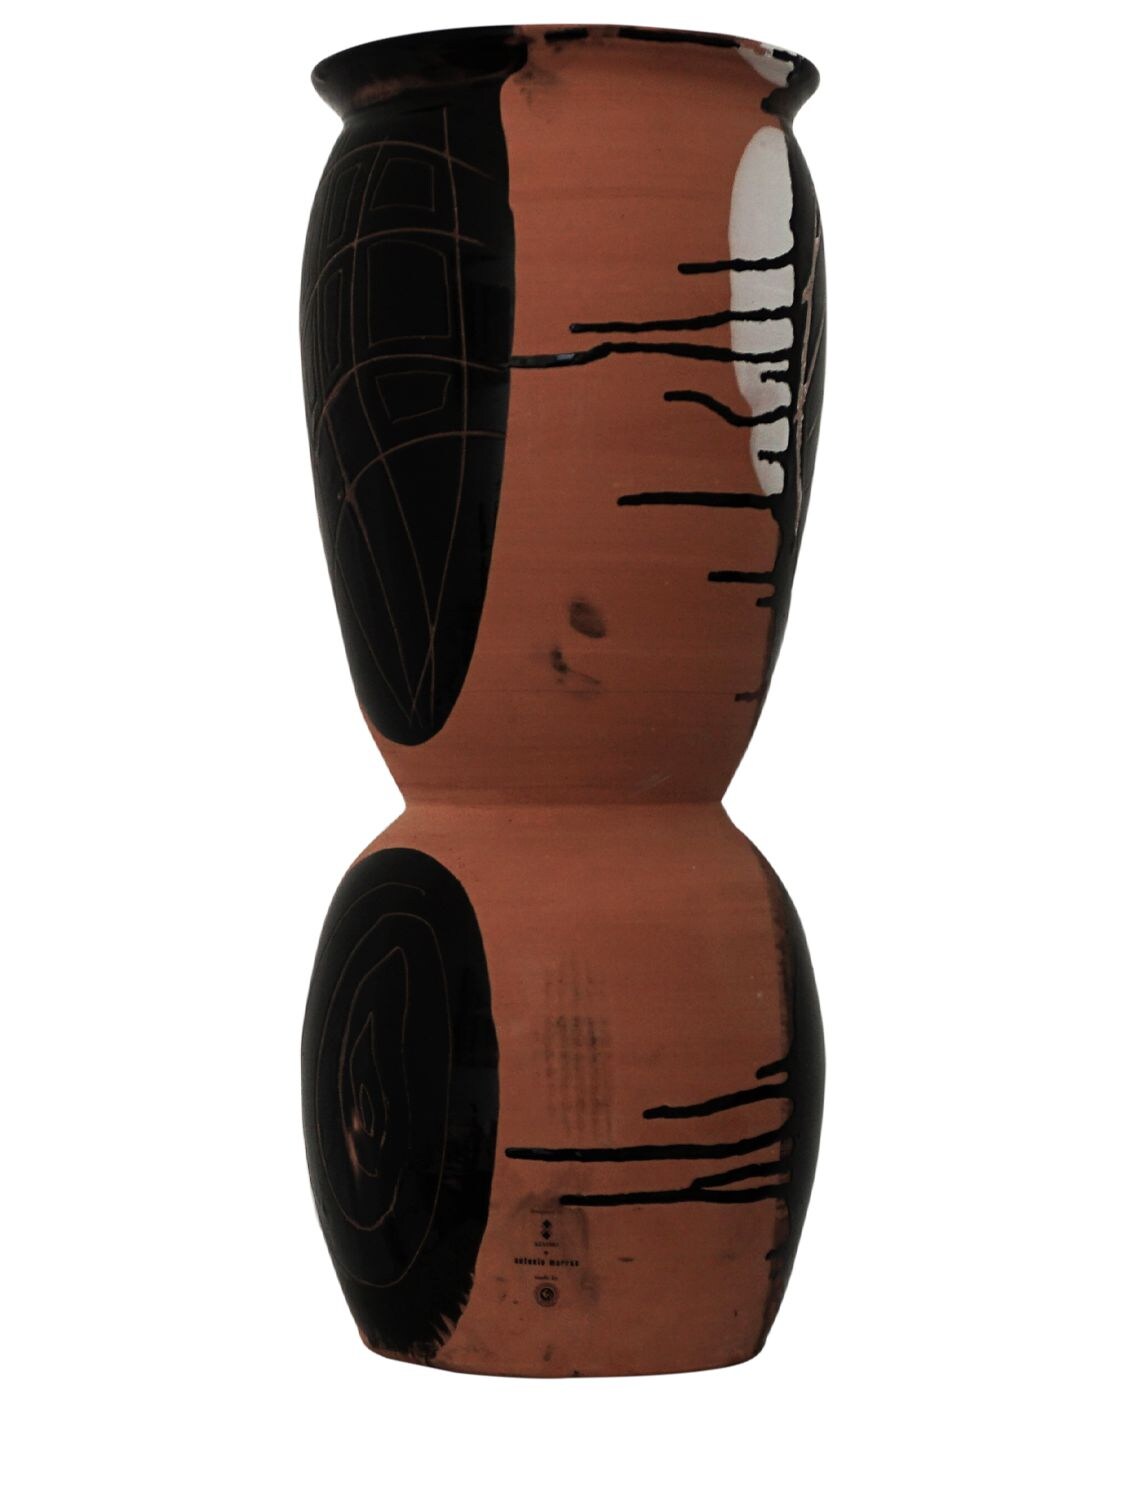 Antonio Marras + Kiasmo Vaso Pezzo Unico 2 Ceramic Vase In Multicolor